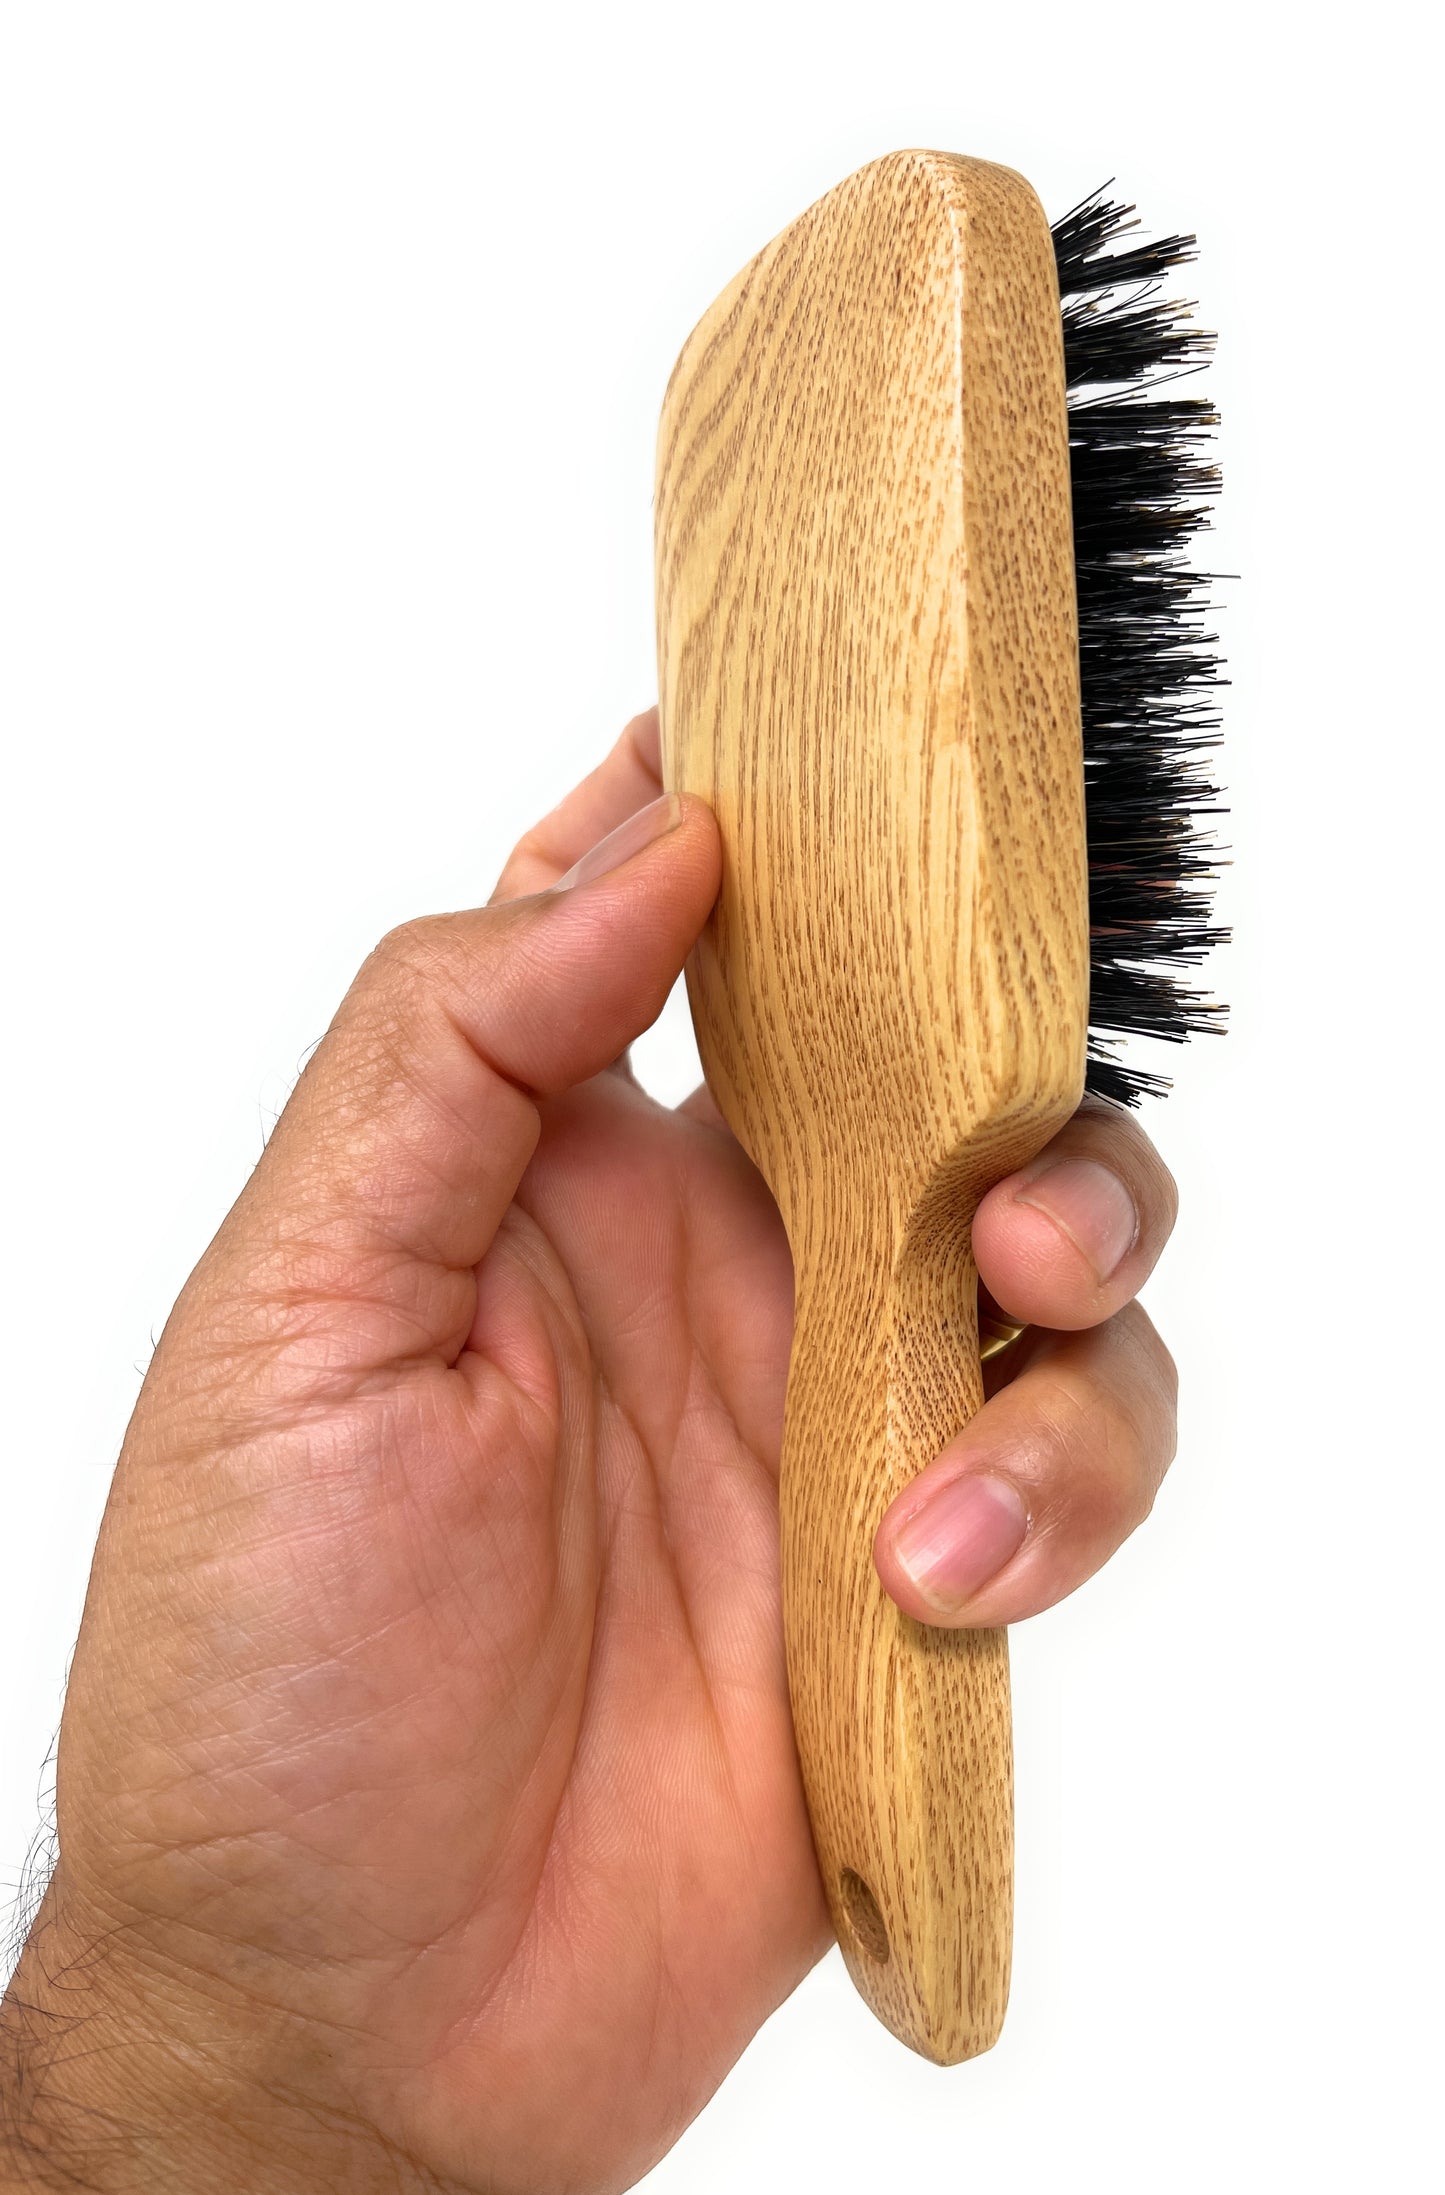 Phillips Brush Gentlemens’ Quarters Club Classic Style Boar Bristle Hair Brush for Men Wood Body.